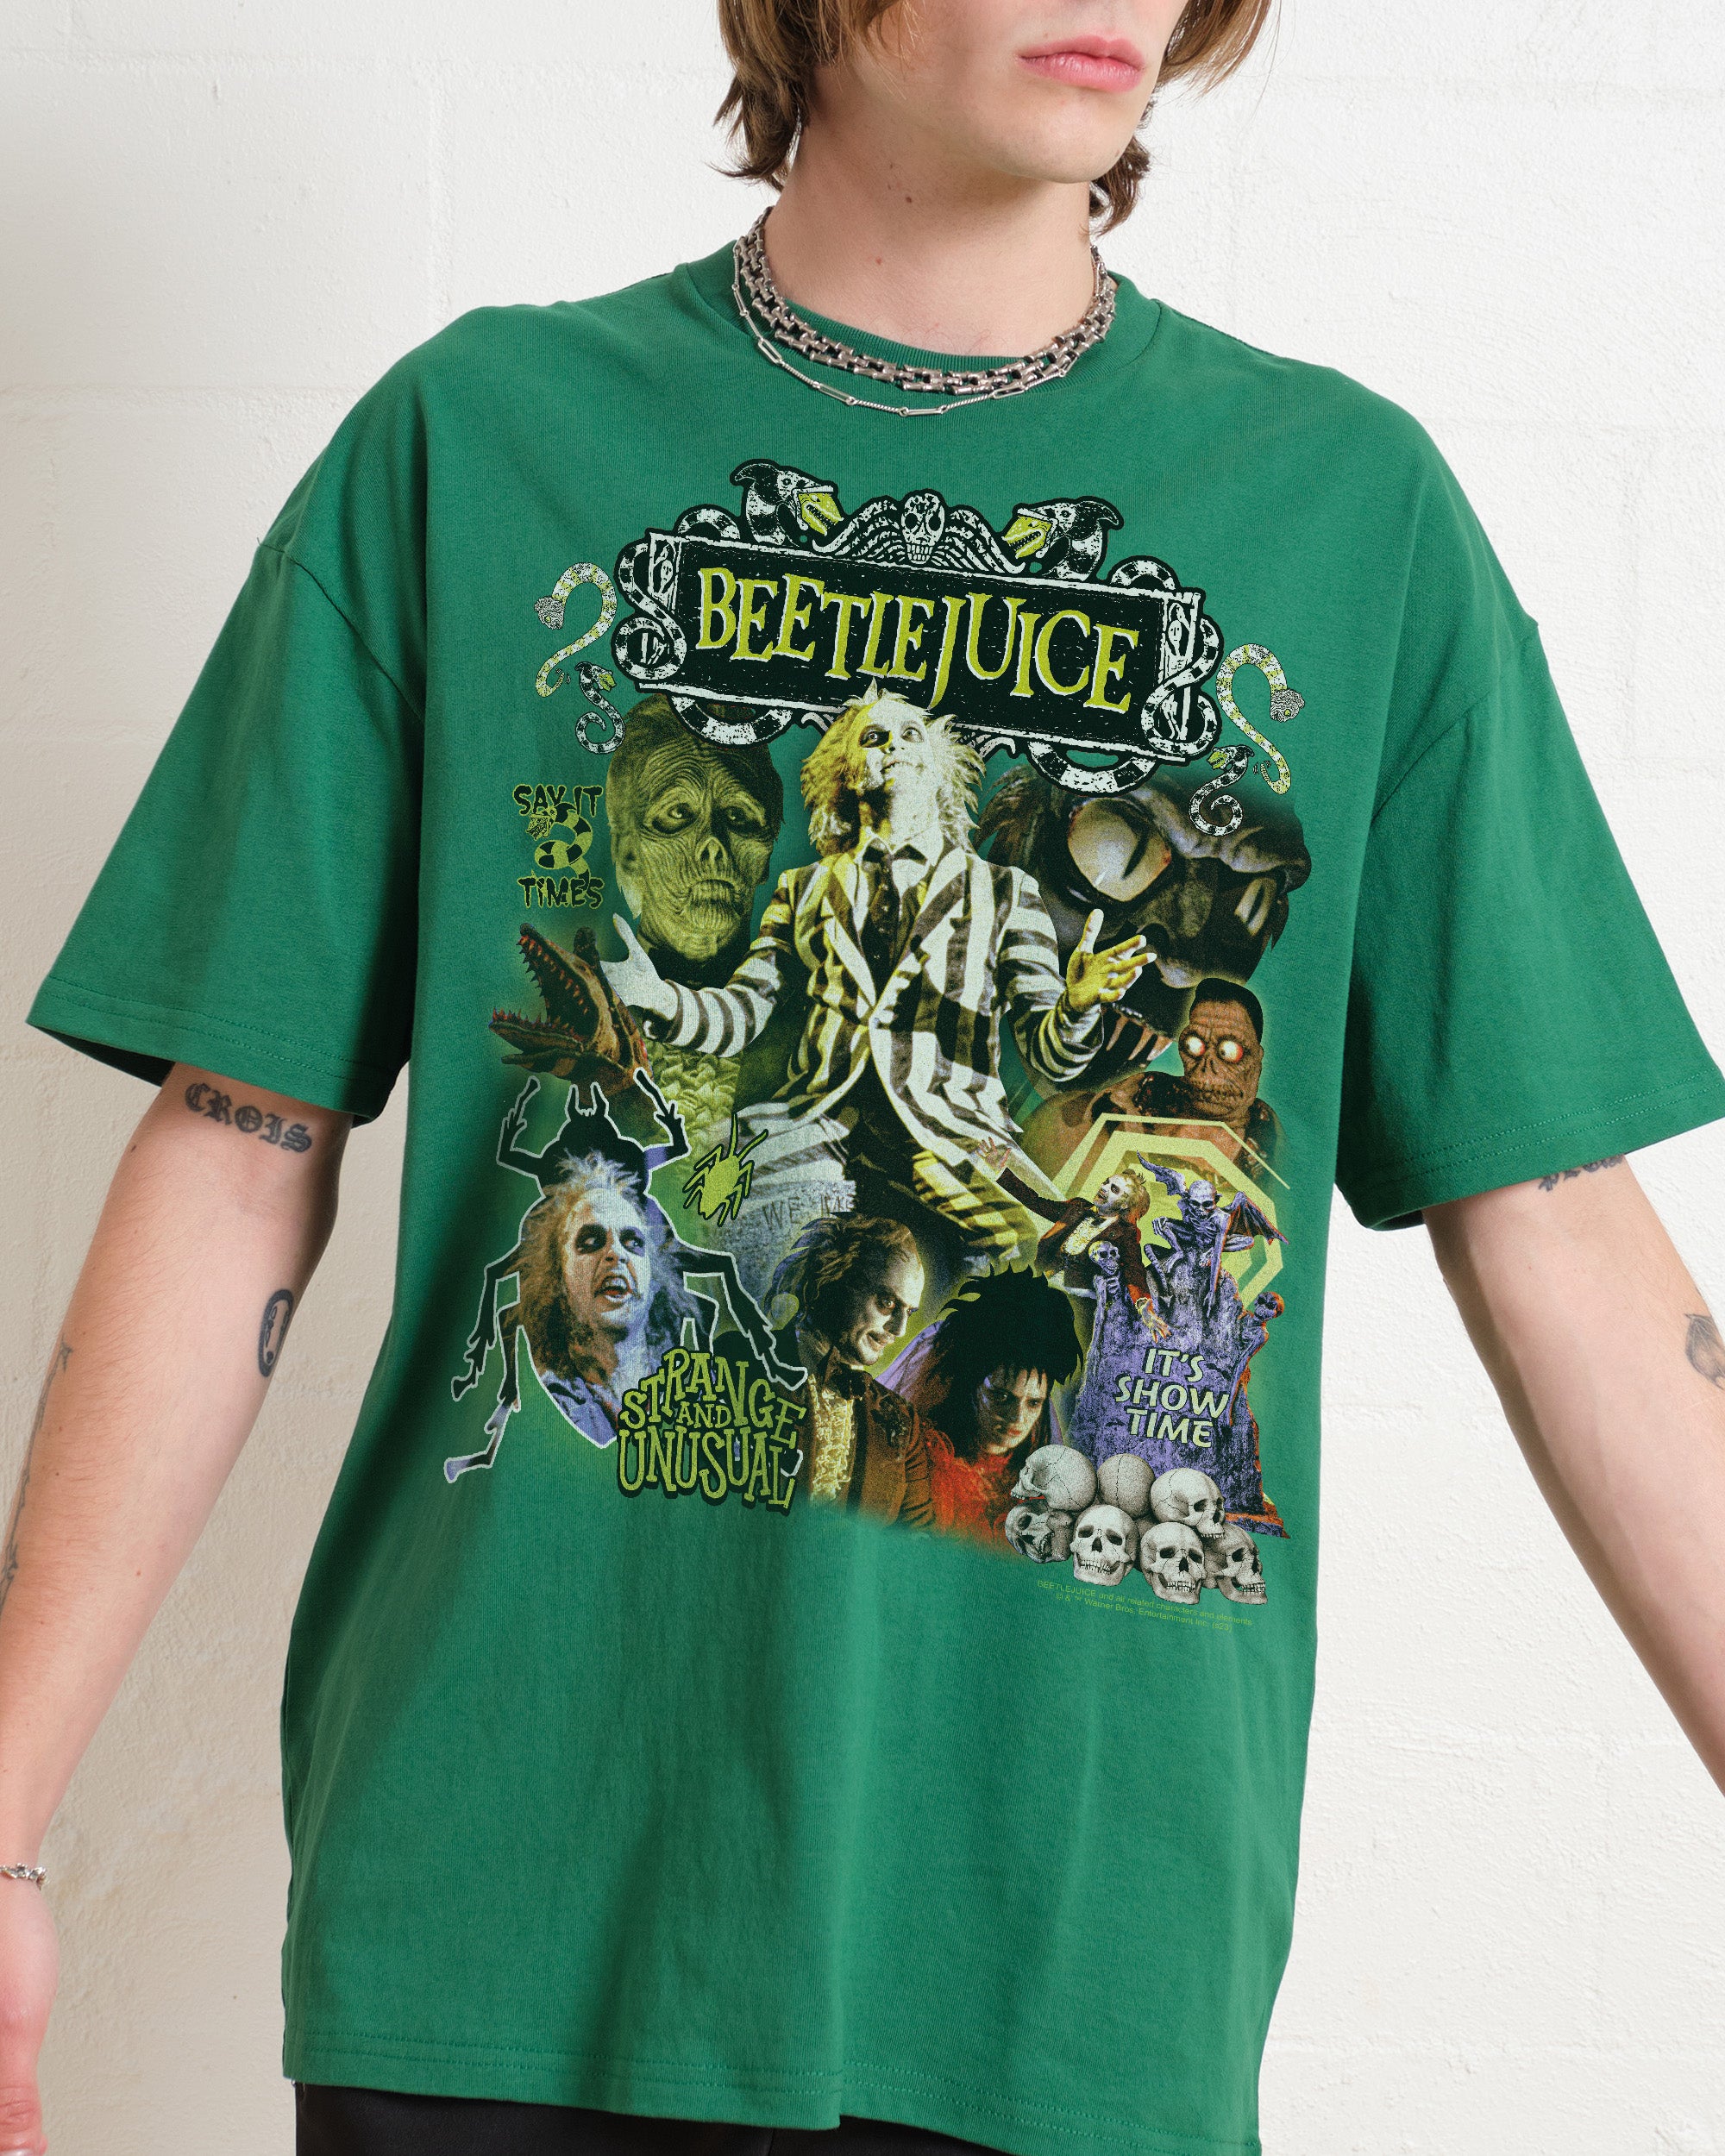 Beetlejuice Bootleg T-Shirt